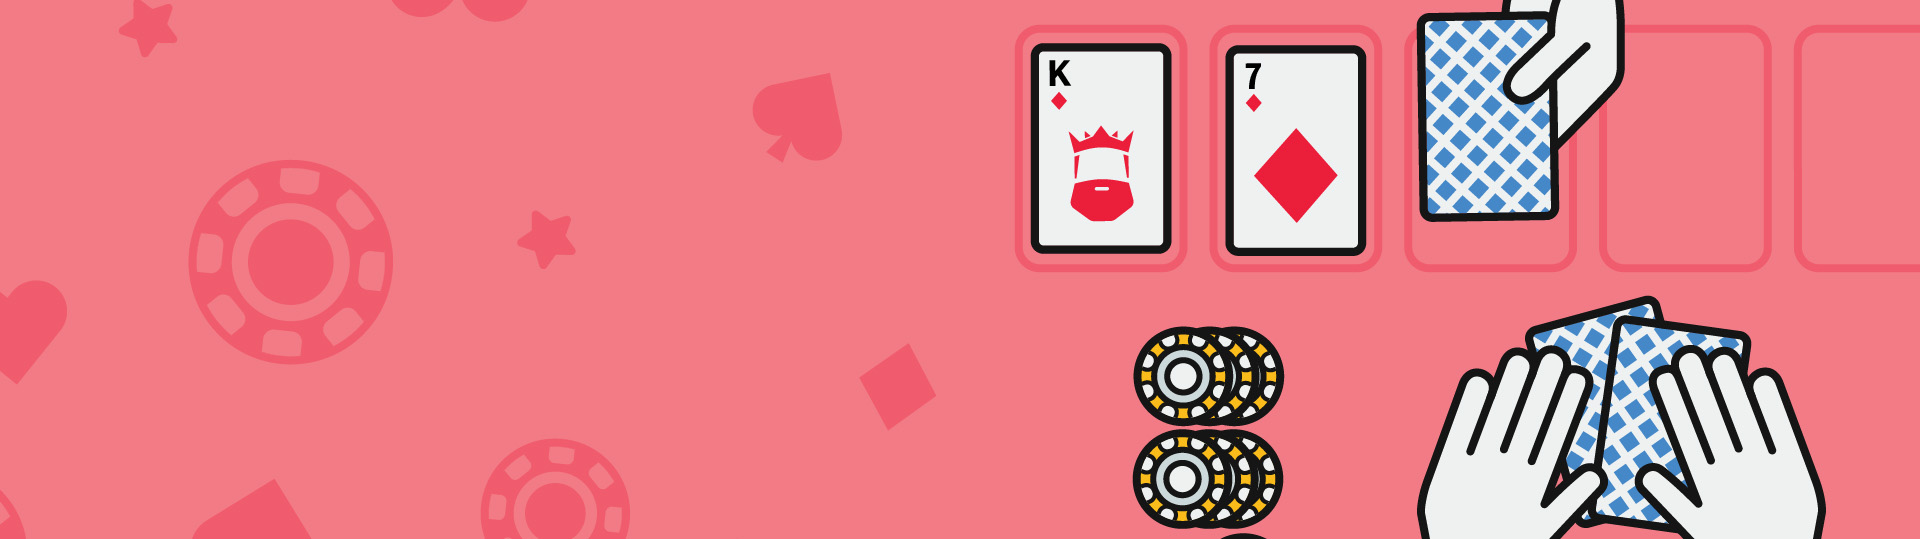 card casino games